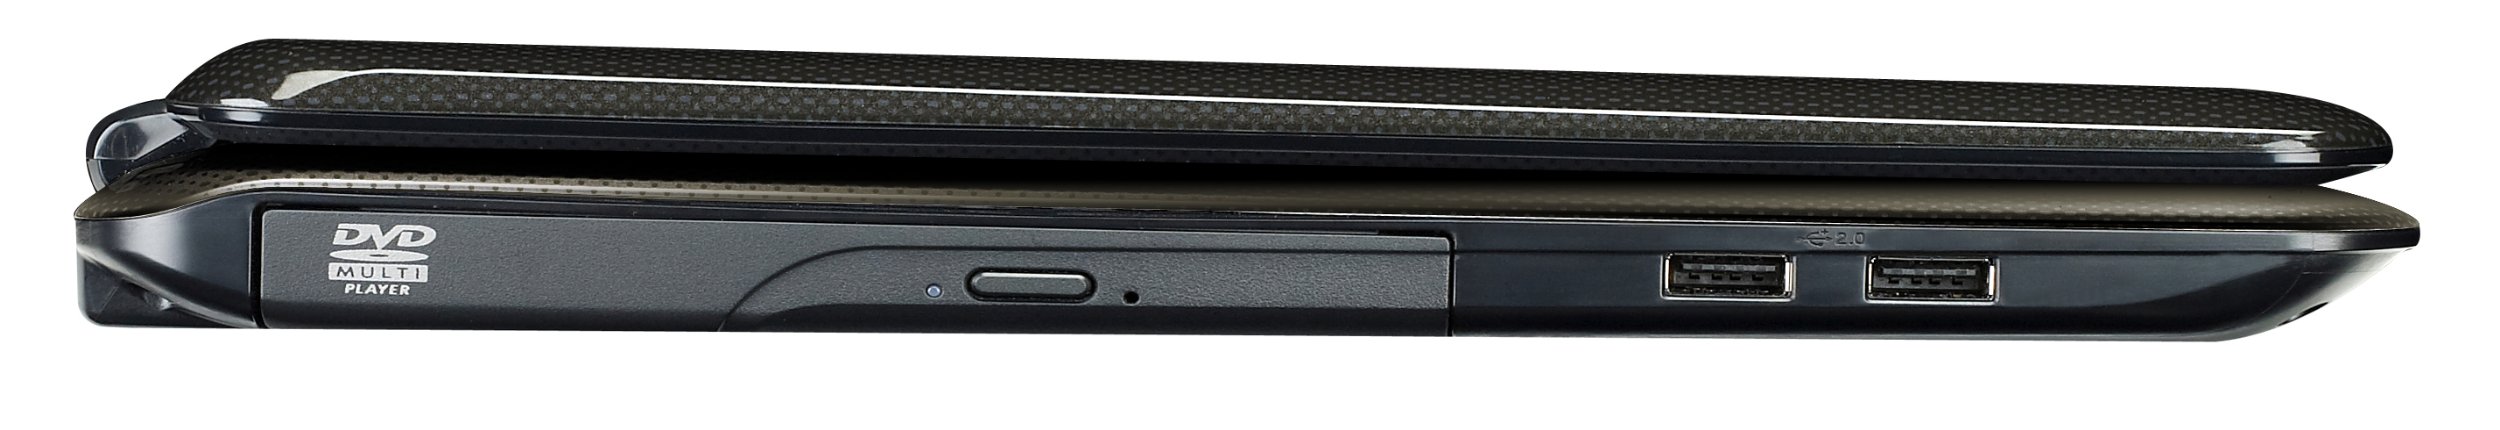 ASUS K50IJ-XA1 15.6-Inch Versatile Entertainment Laptop (Black)